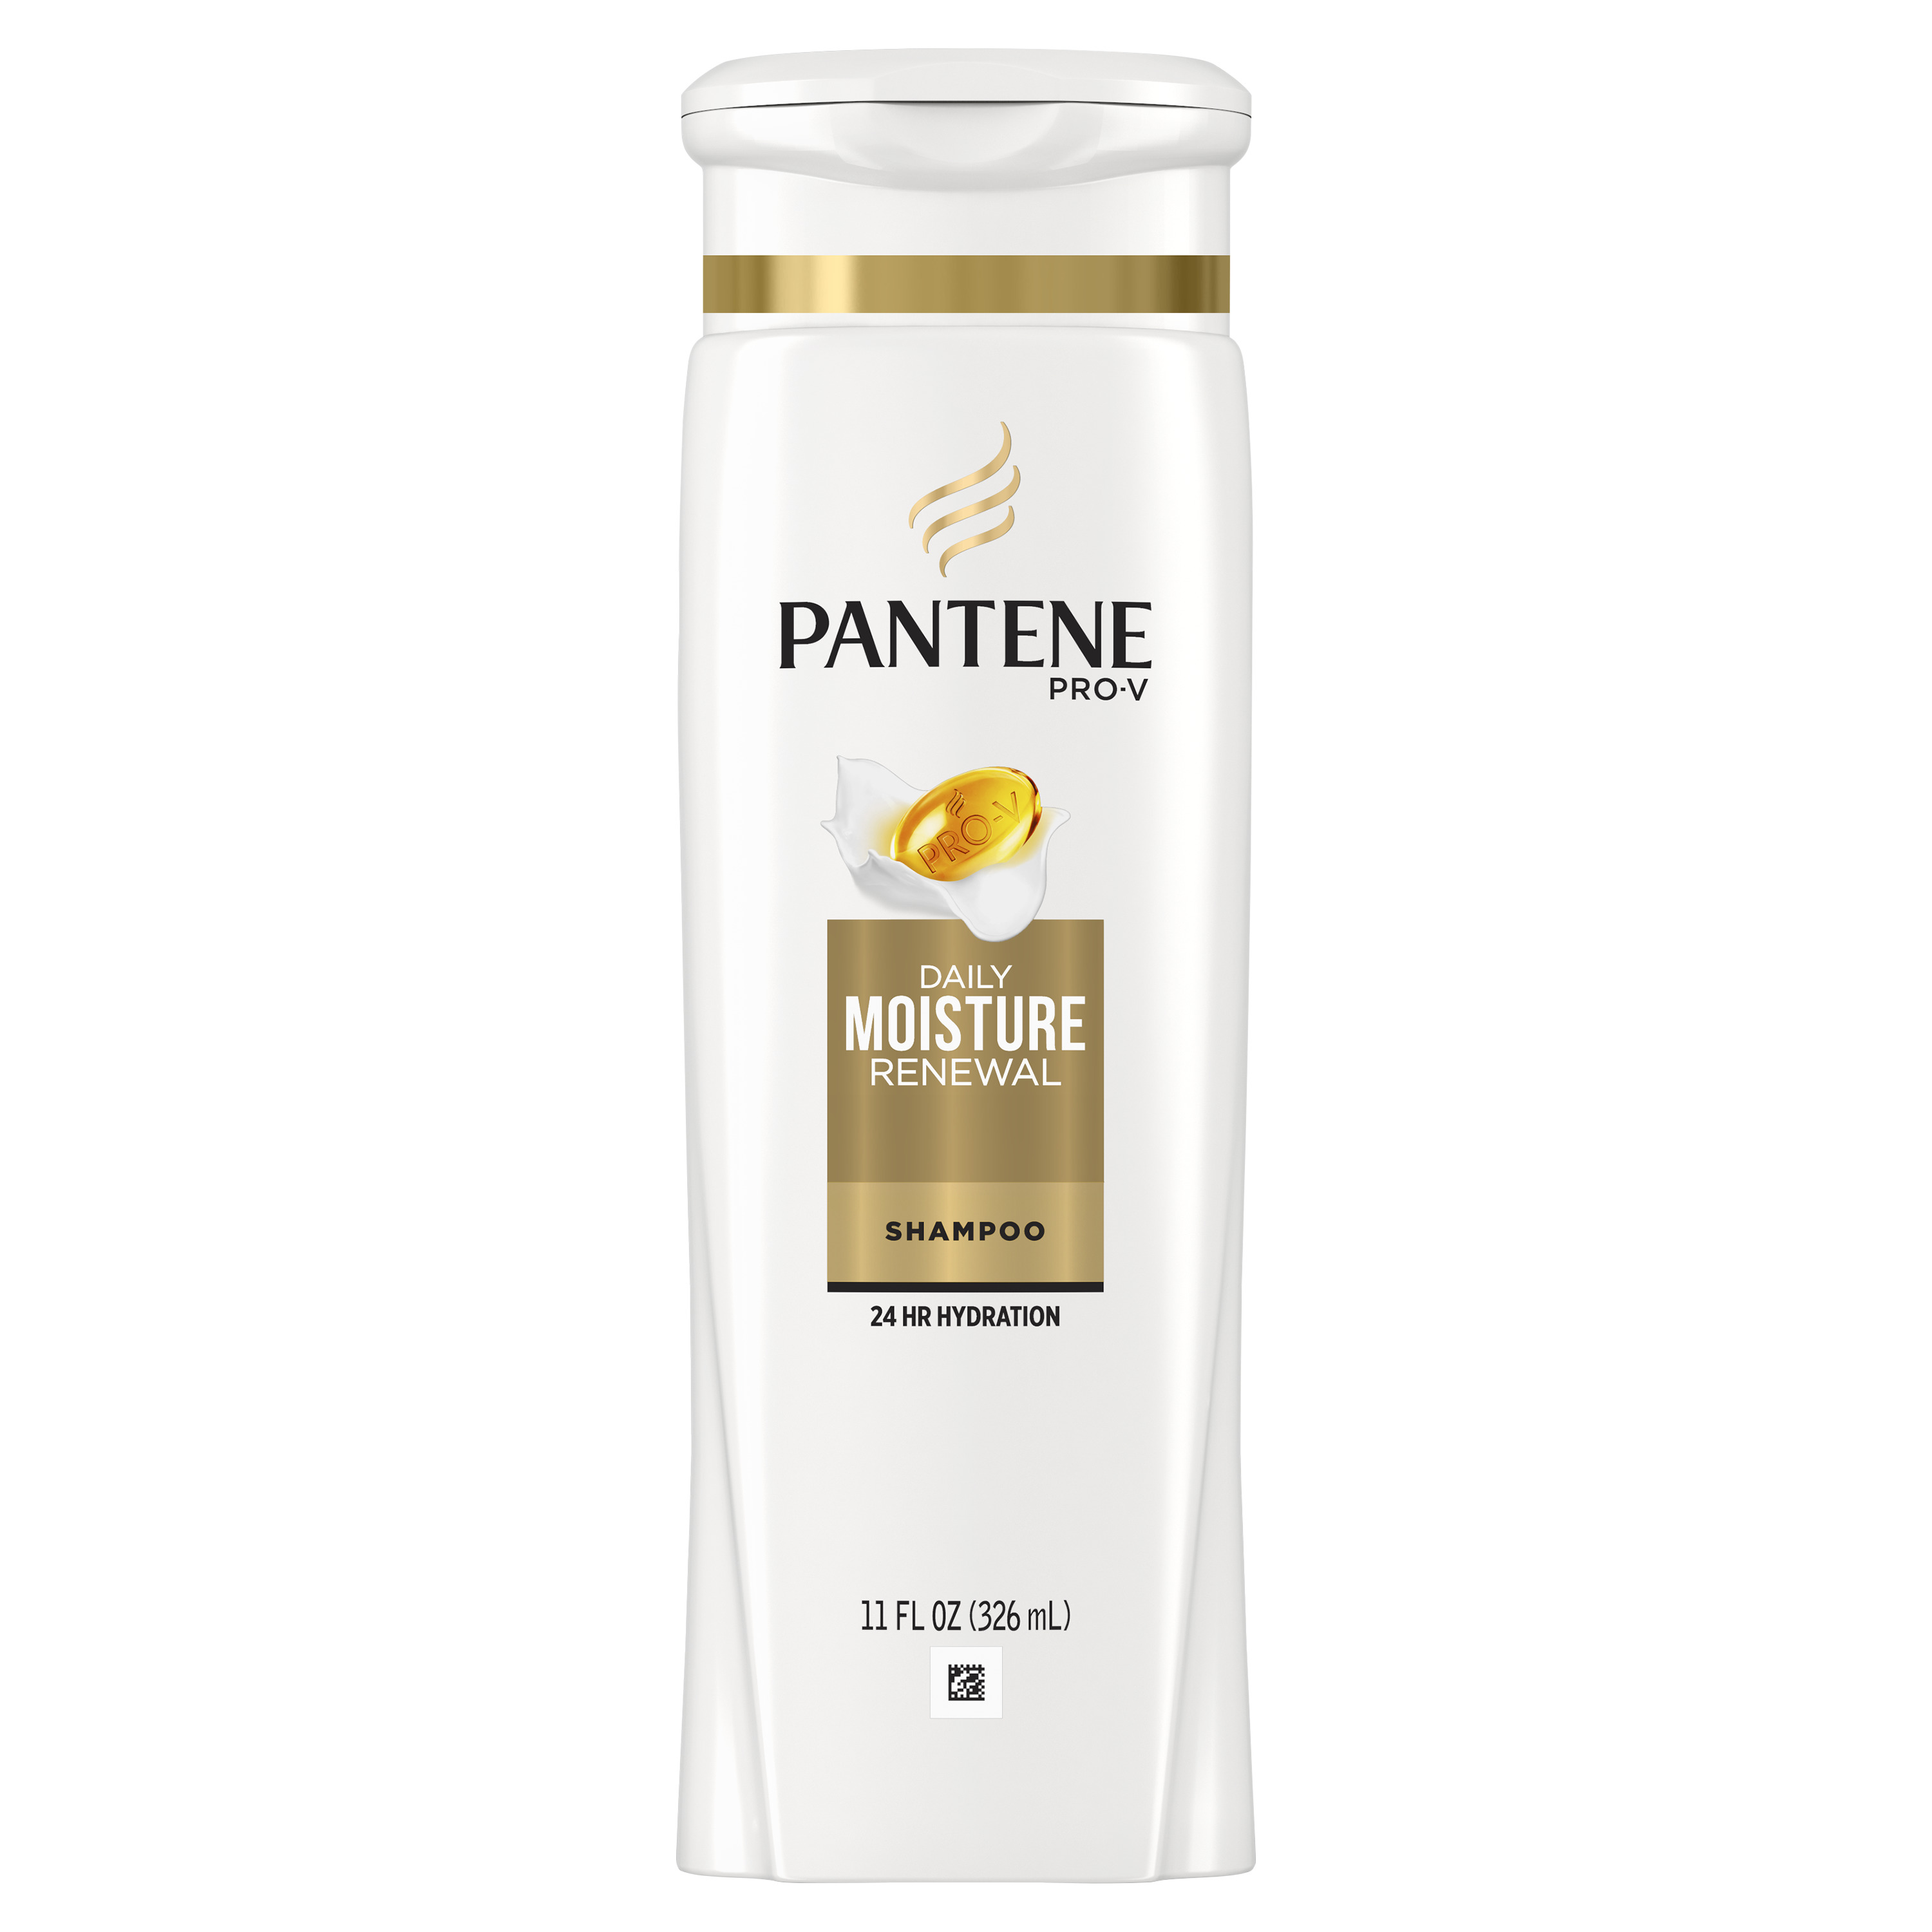 Pantene Pro-V Daily Moisture Renewal Detangling Shampoo, 11 fl oz - image 1 of 6